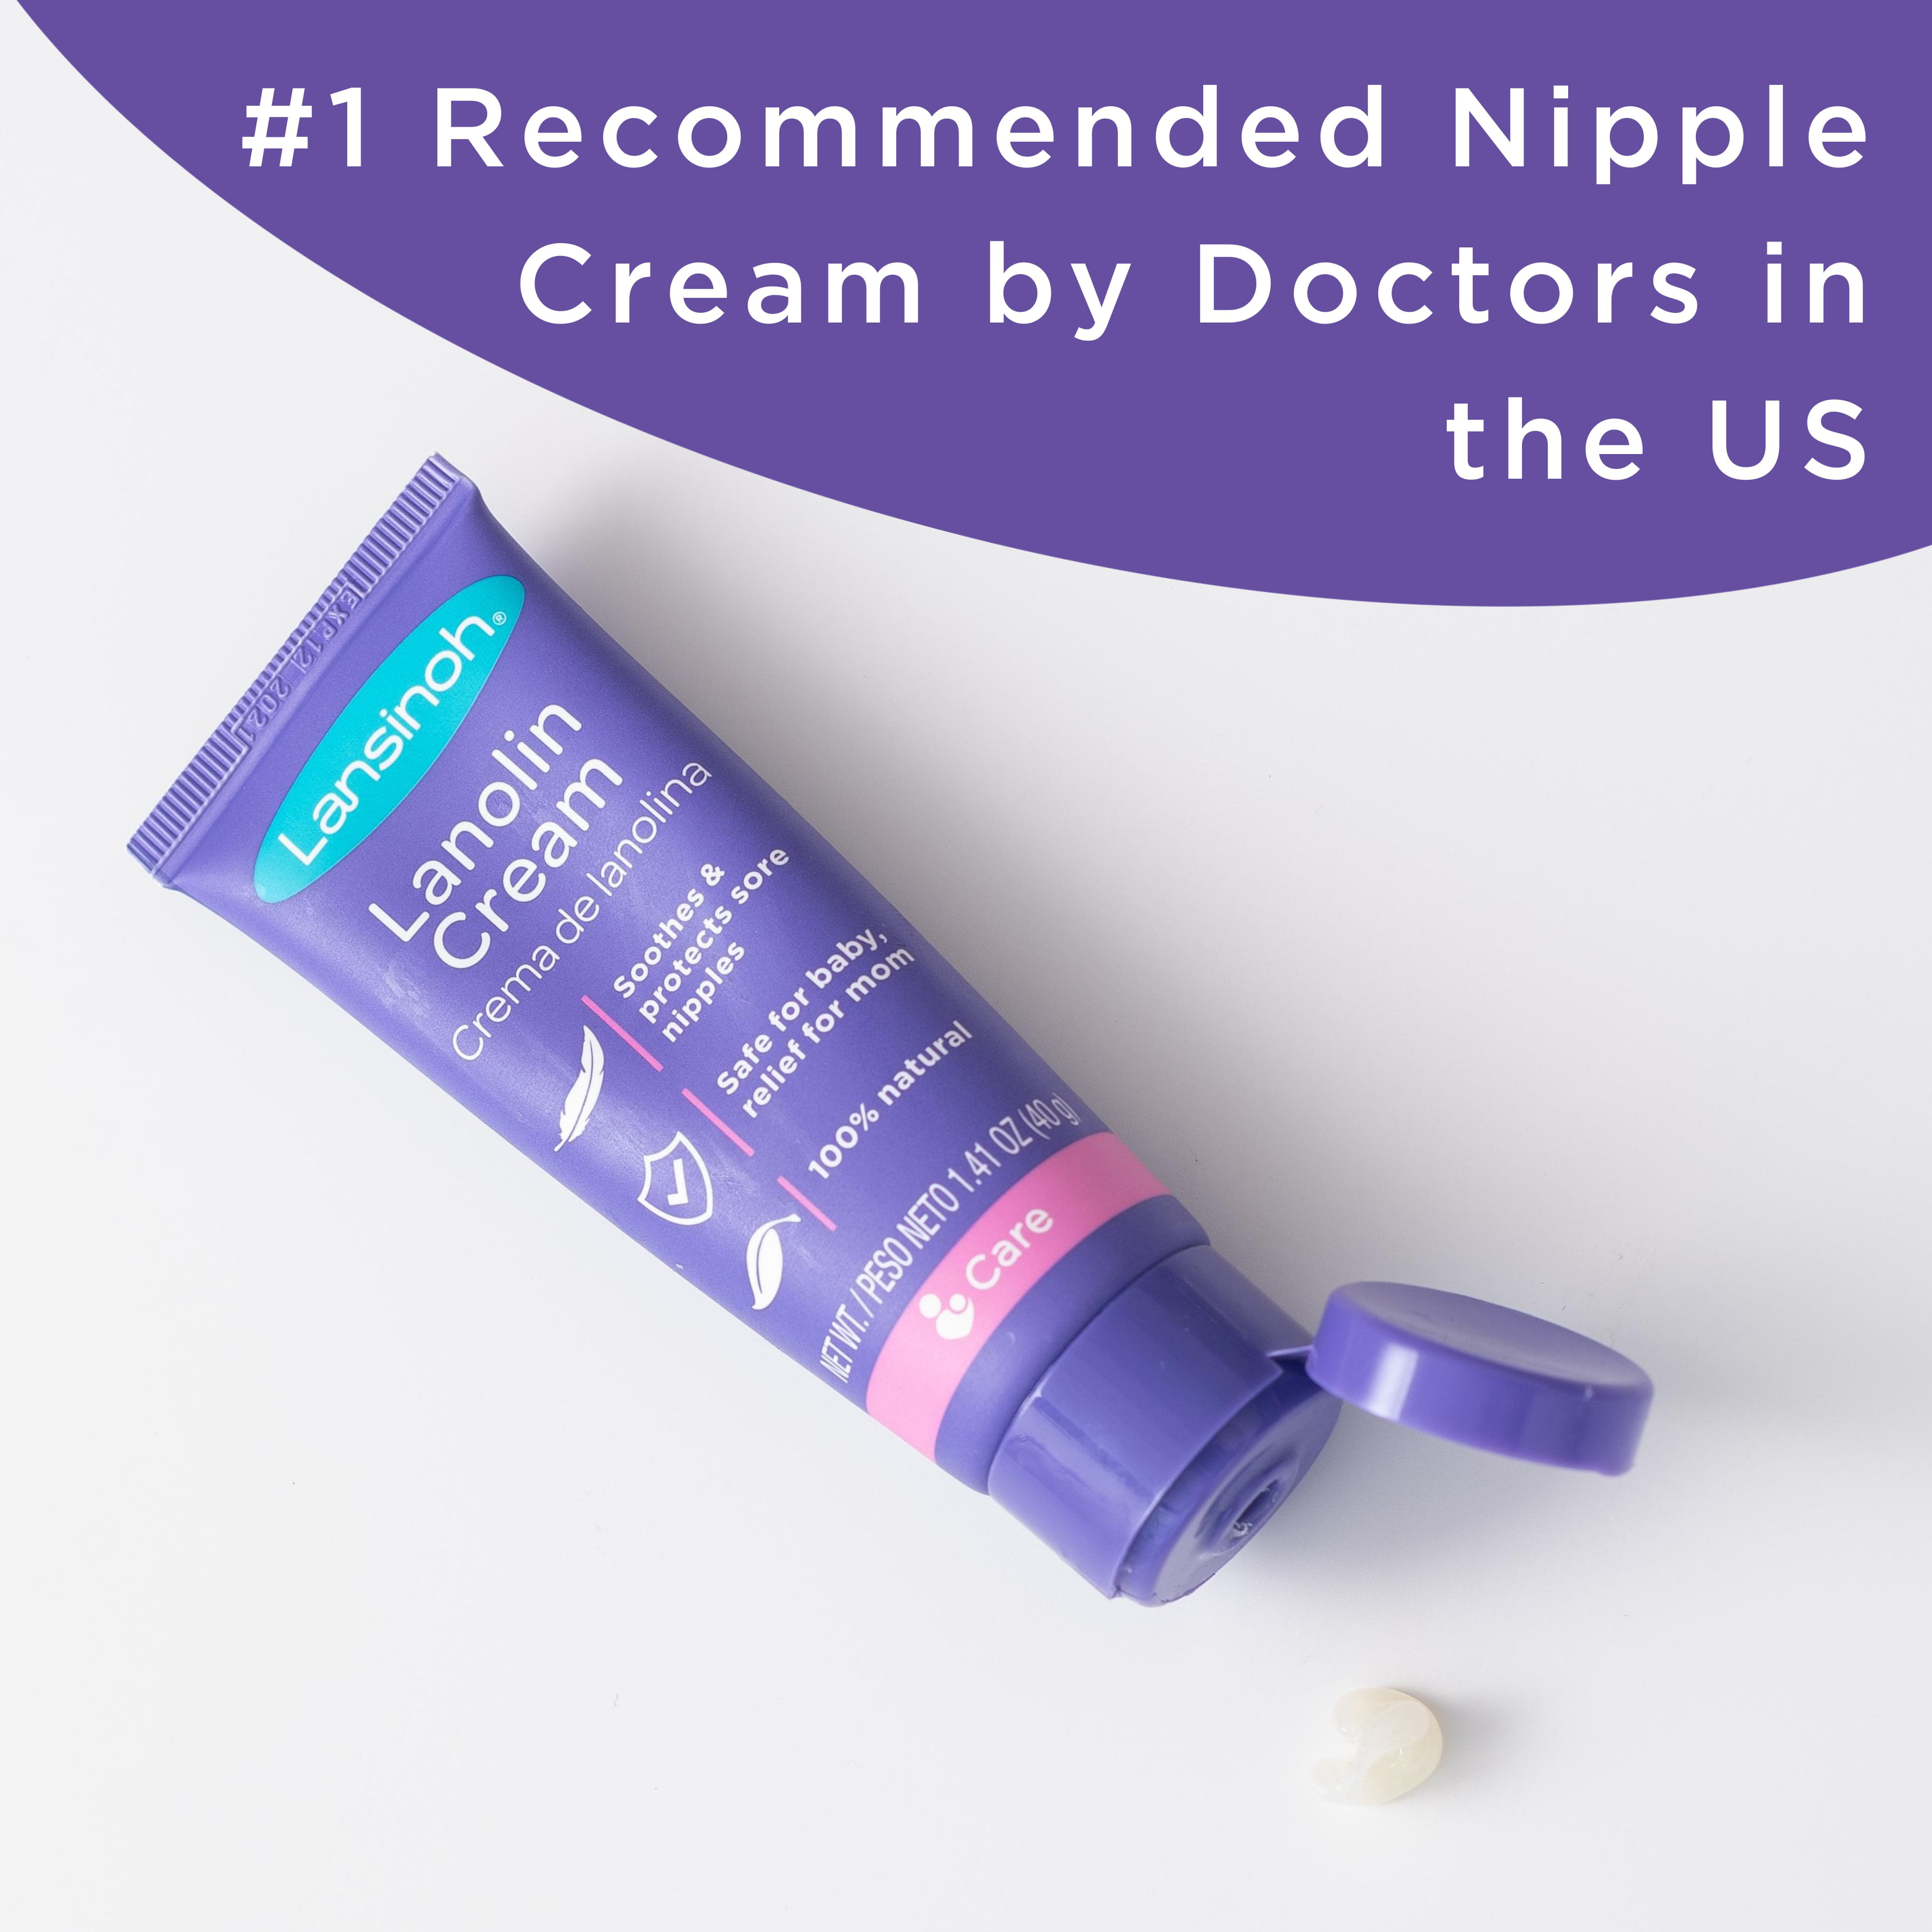 Lansinoh Lanolin Nipple Cream For Breastfeeding Essentials - 1.41